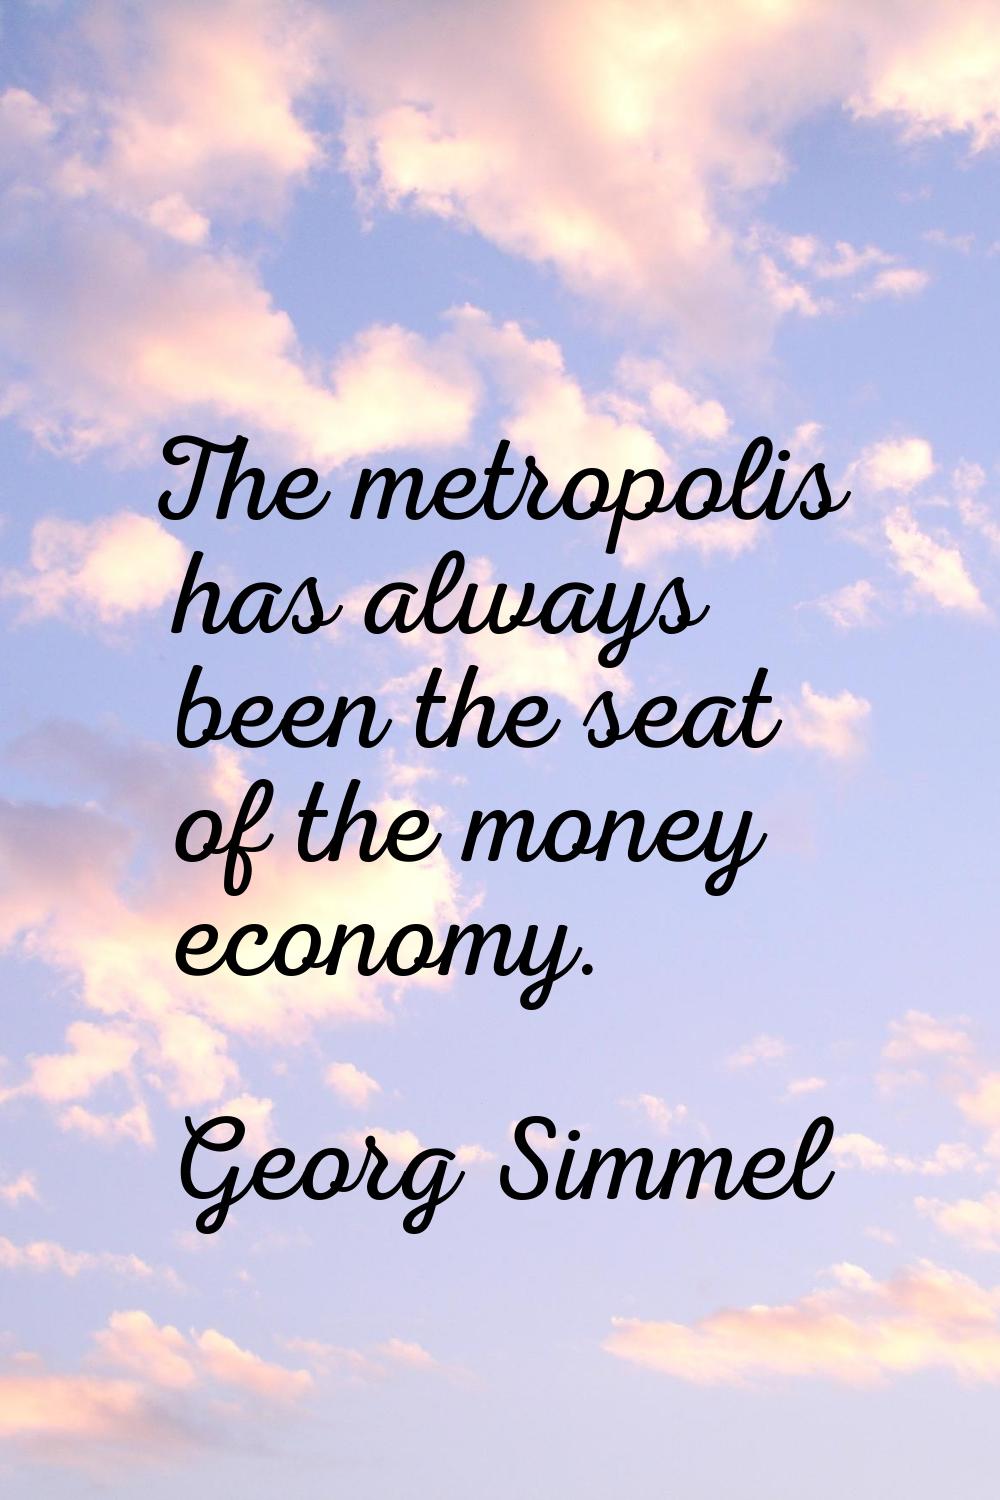 The metropolis has always been the seat of the money economy.